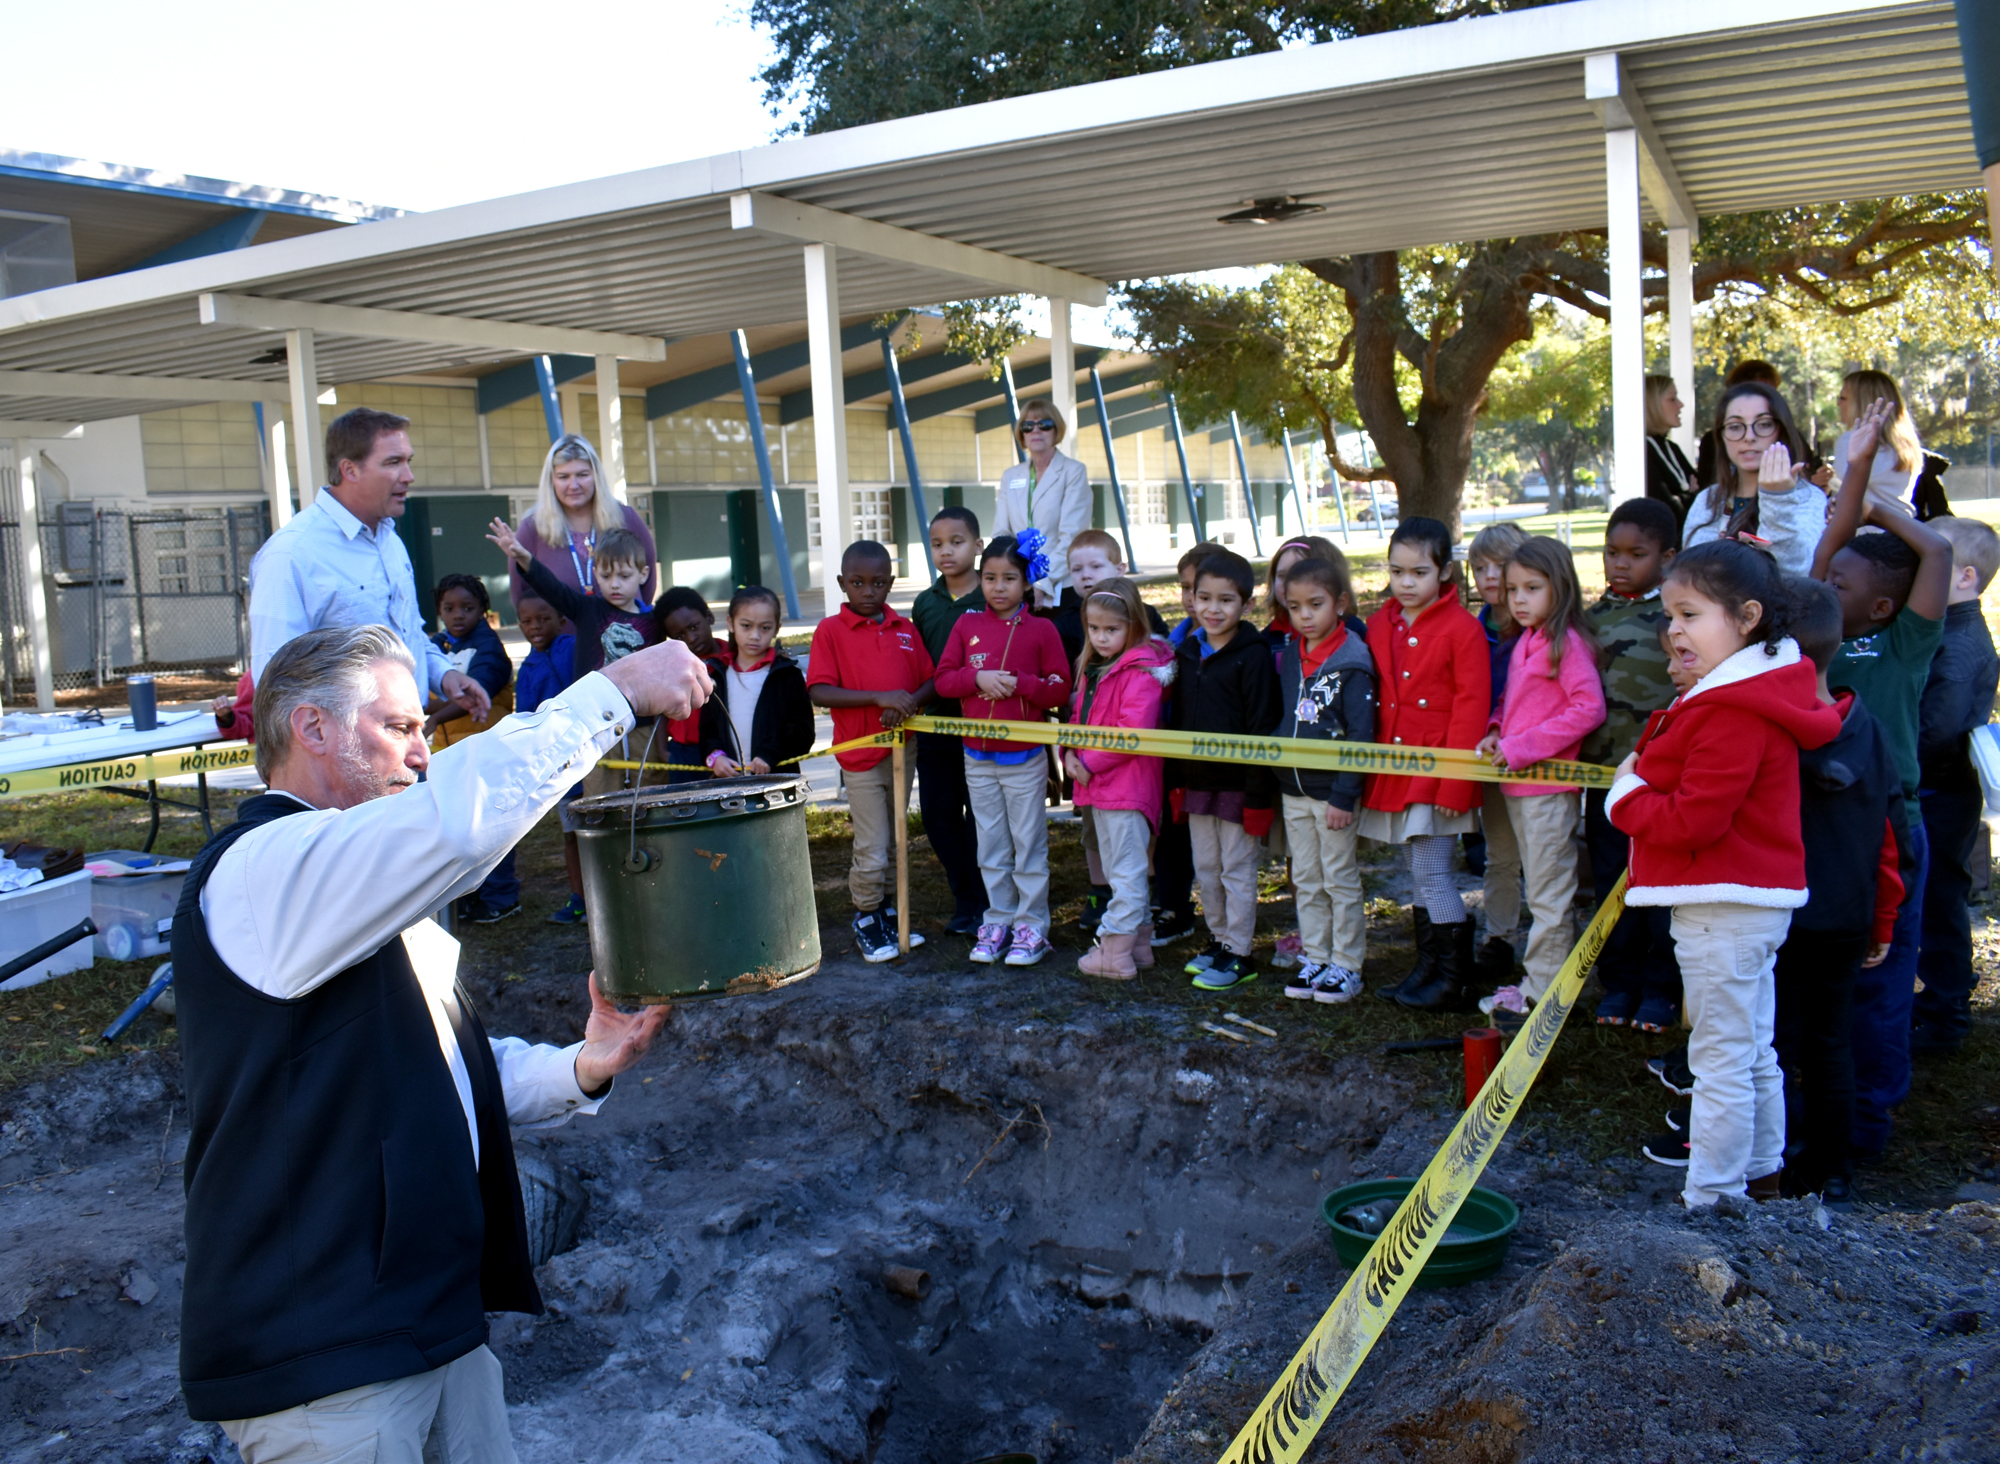 USF's Dana Zeidler shows kindergarten students a barrel he found in the site.